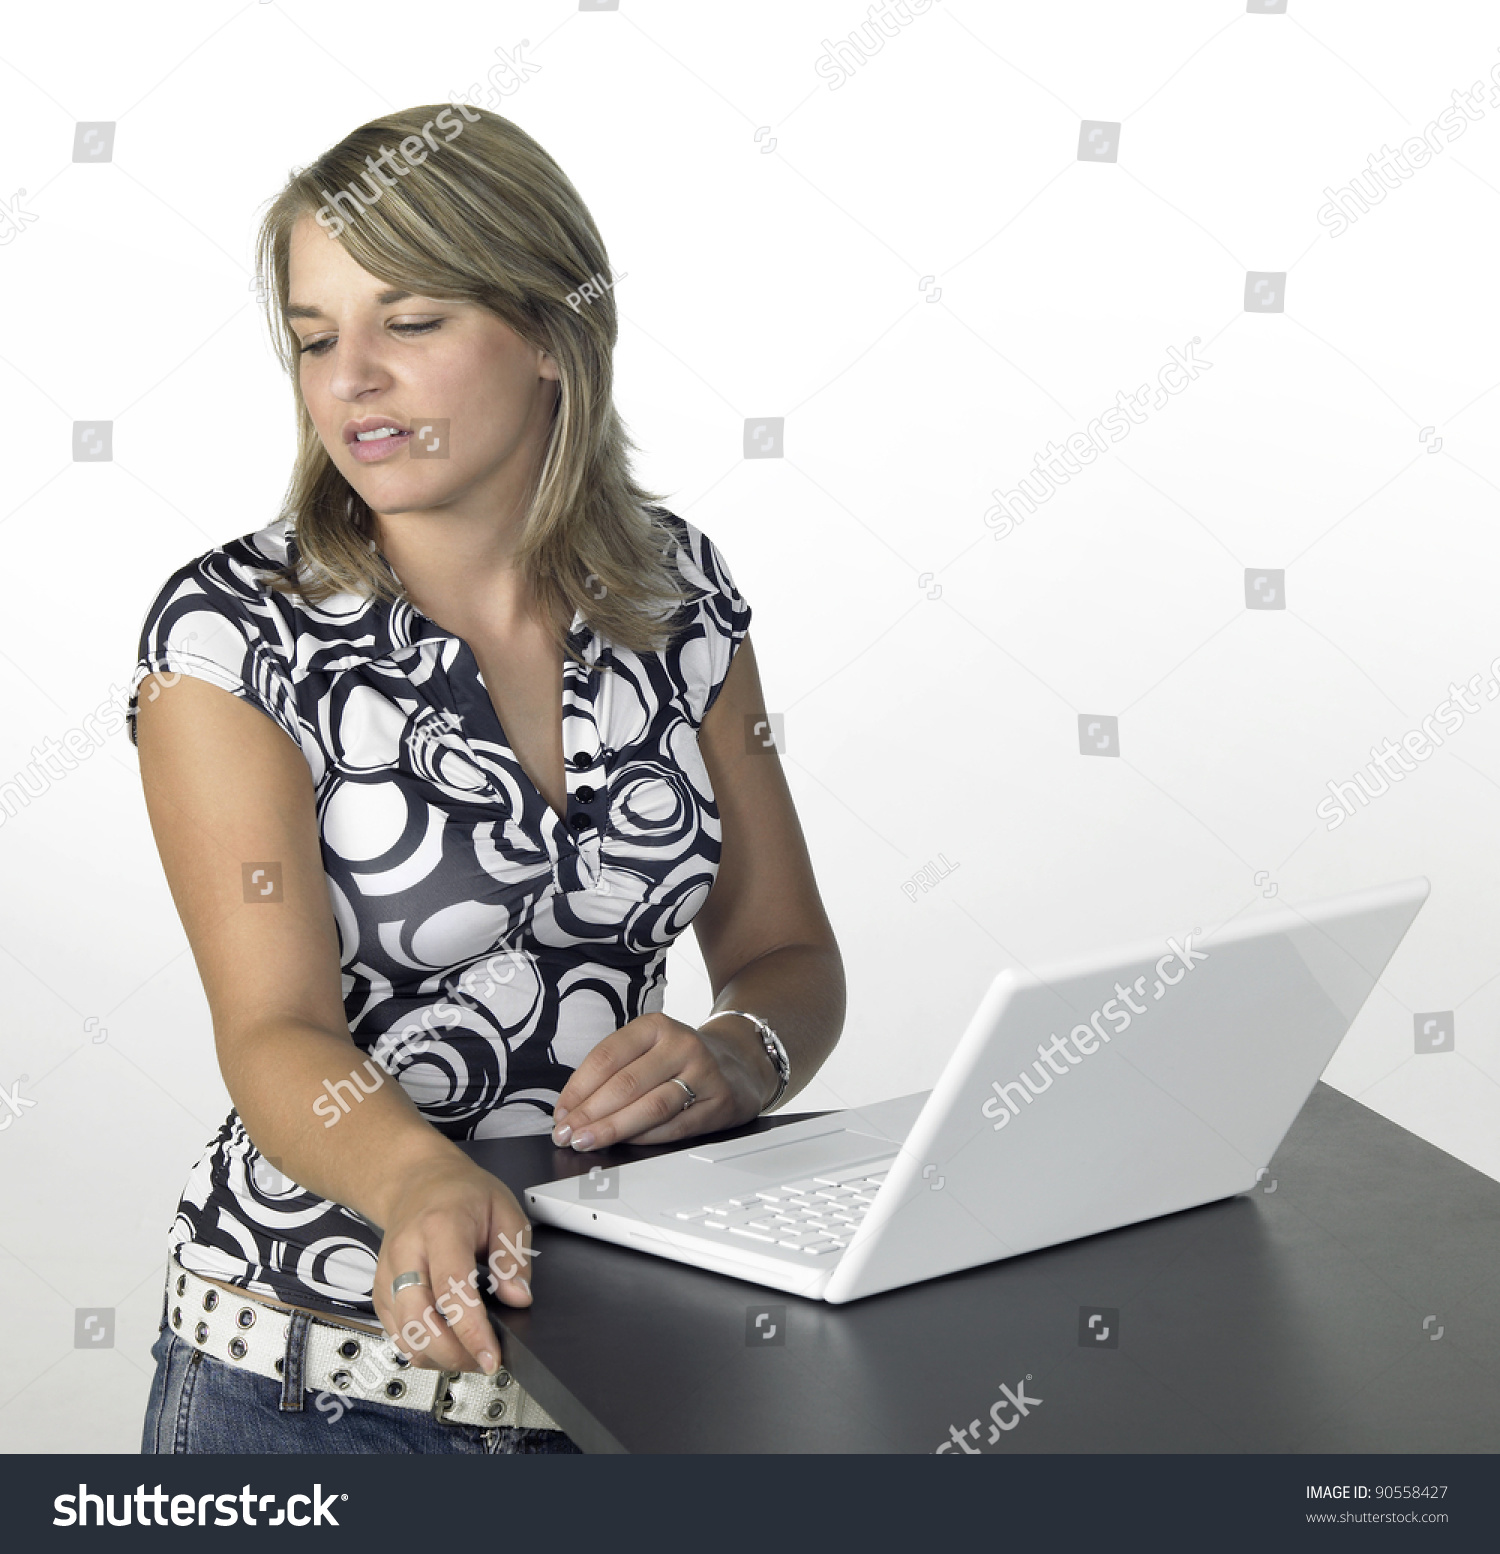 Disgustedly Girl Laptop Light Back Stock Photo 90558427 - Shutterstock